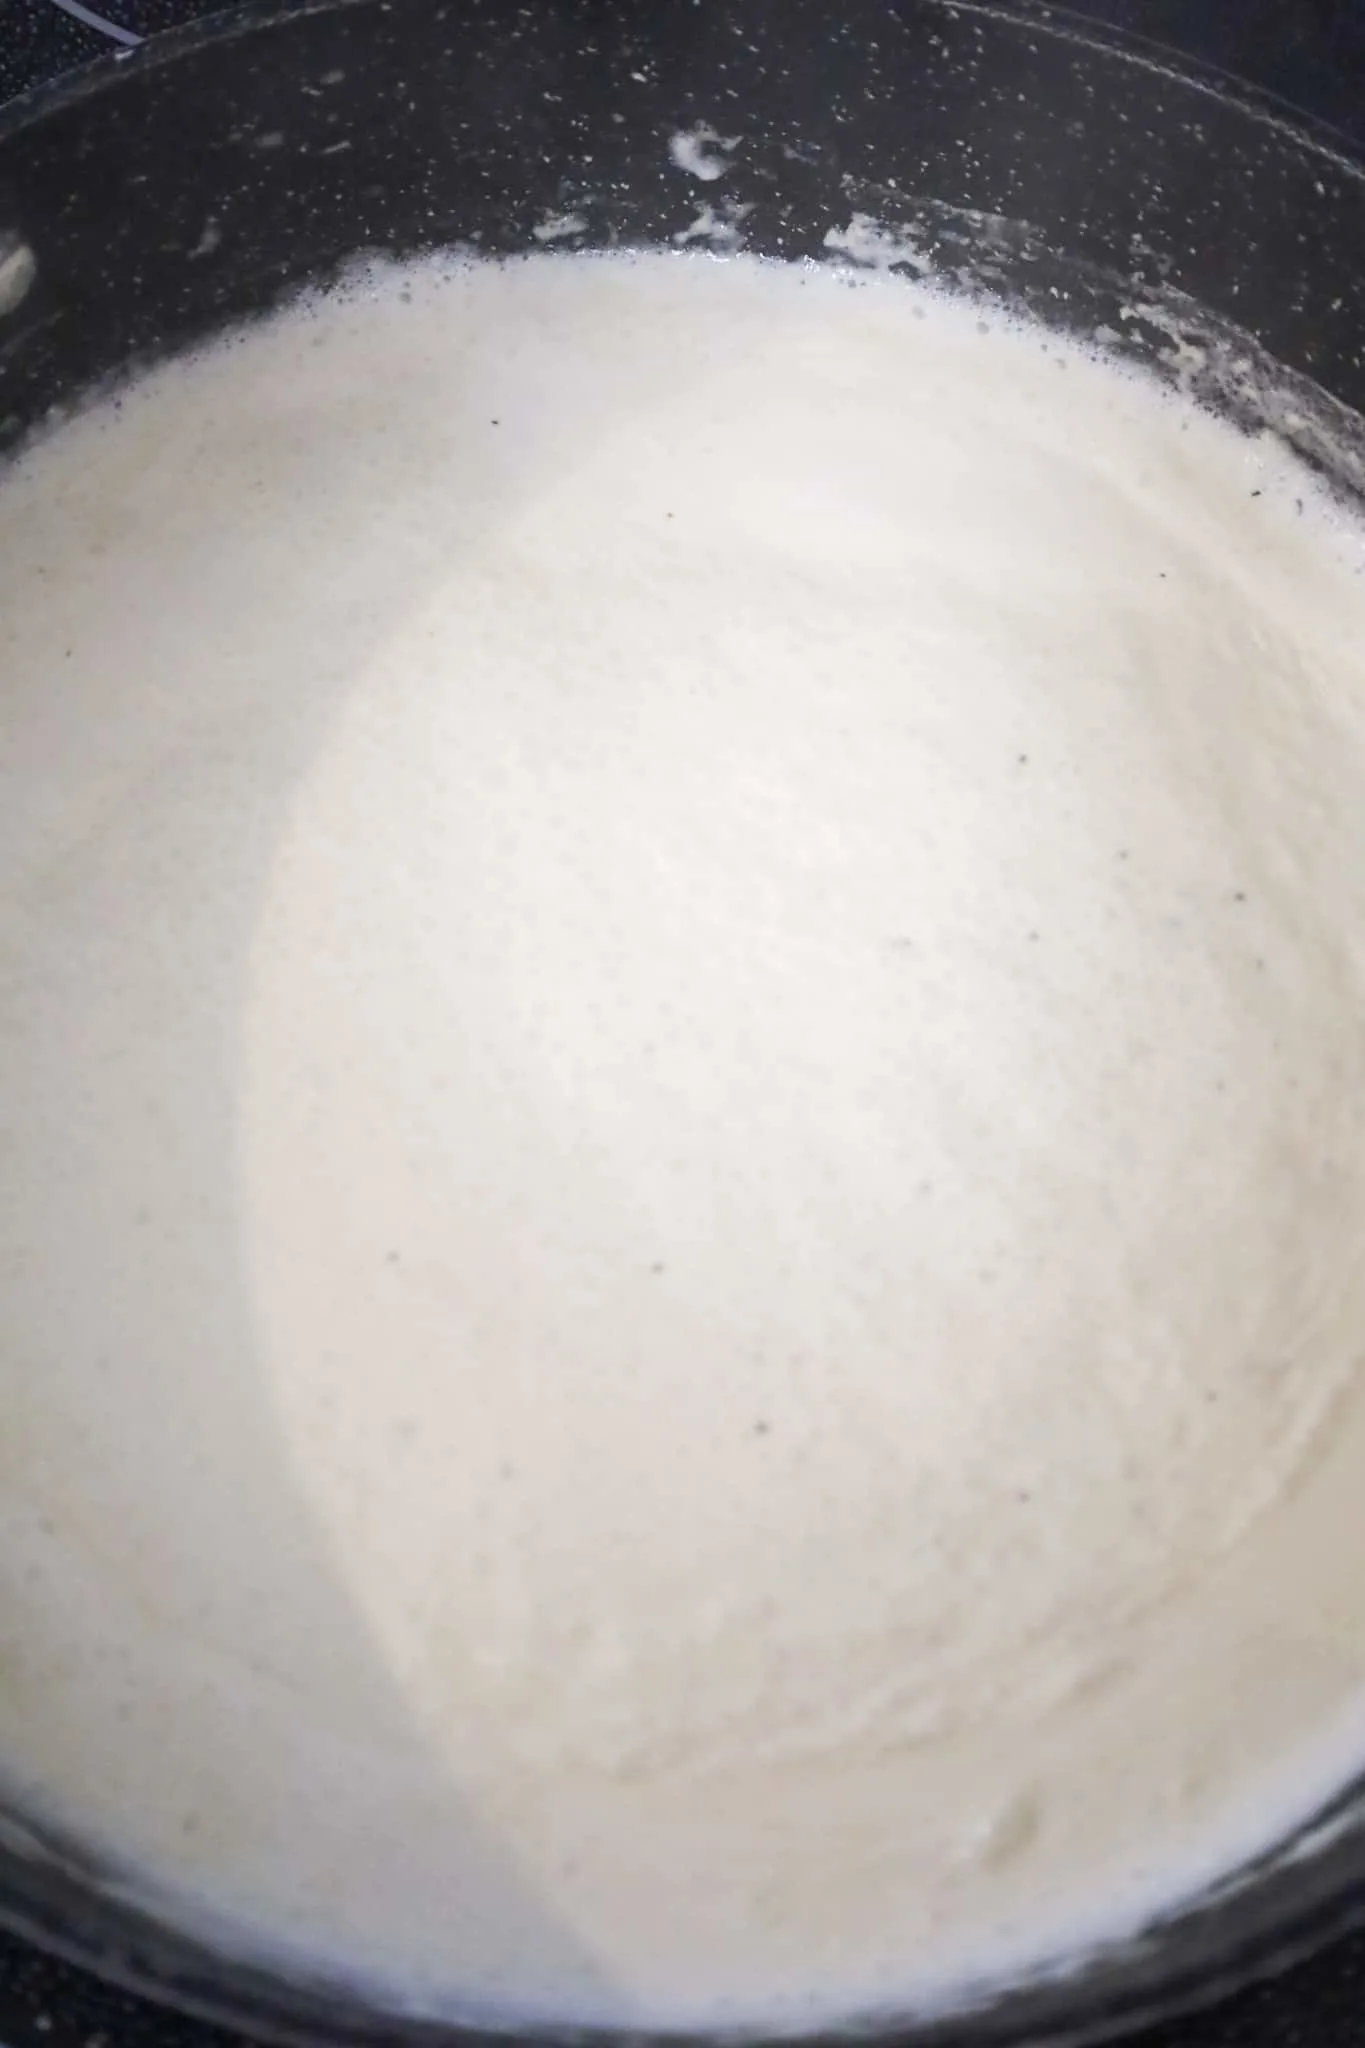 creamy sauce simmering in pan